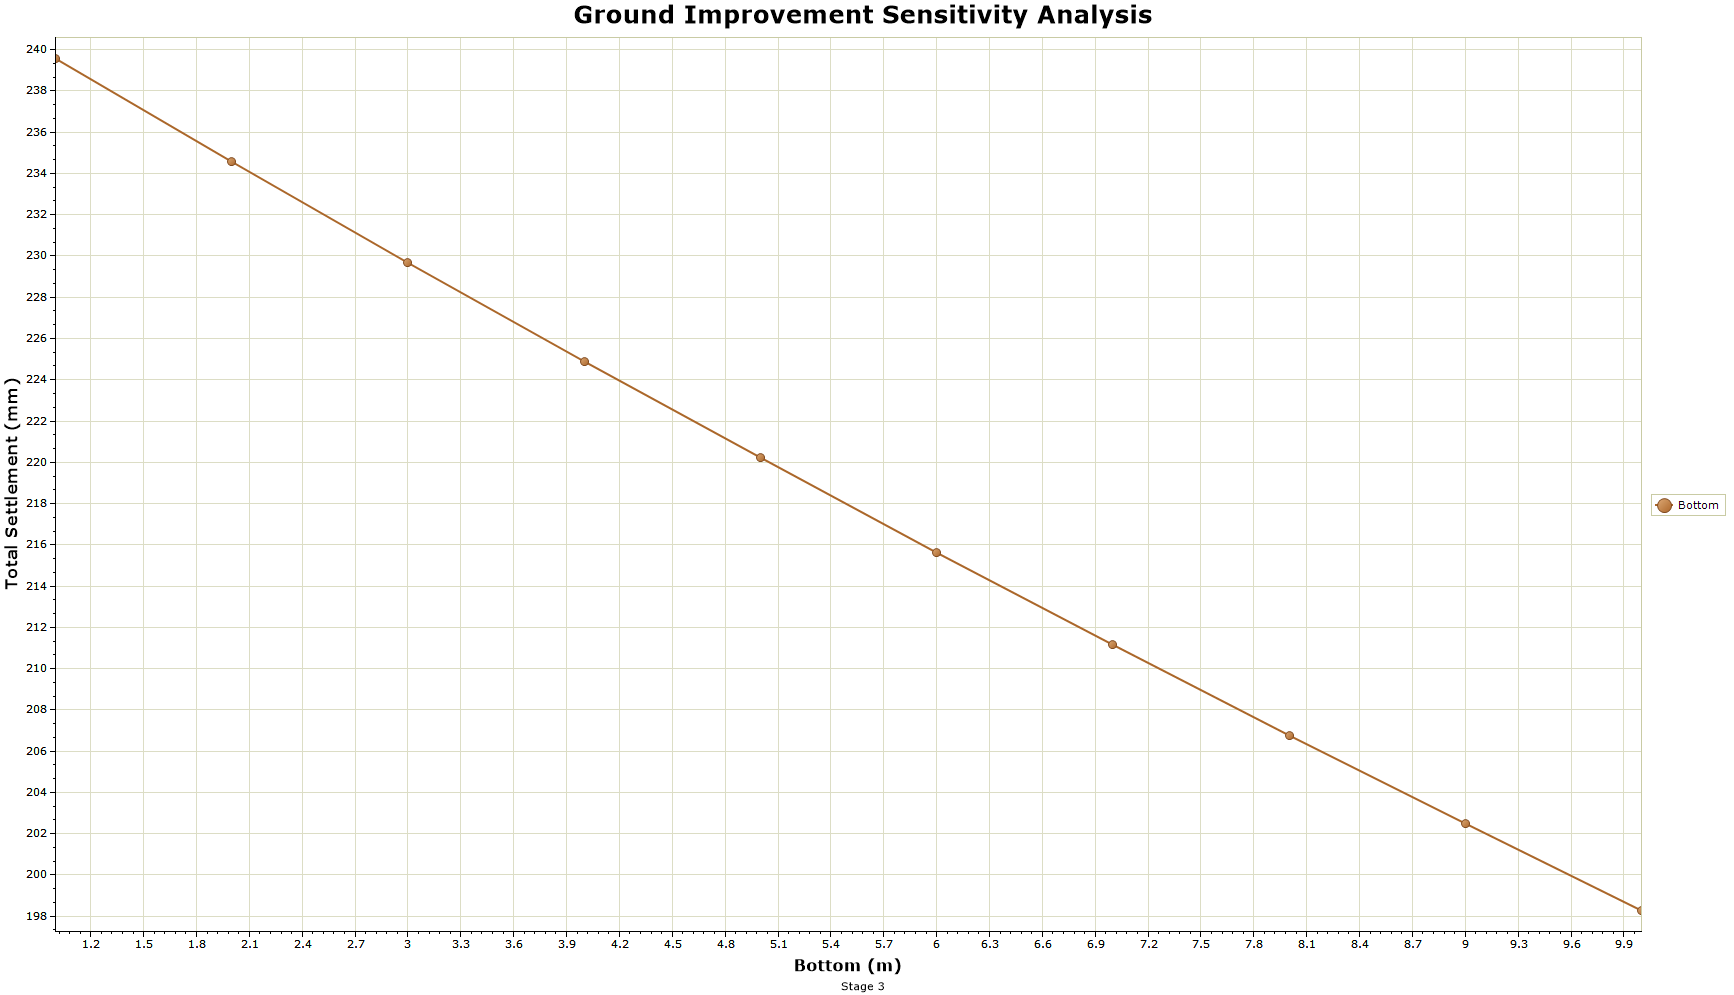 Ground Improvement Sensitivity Analysis plot